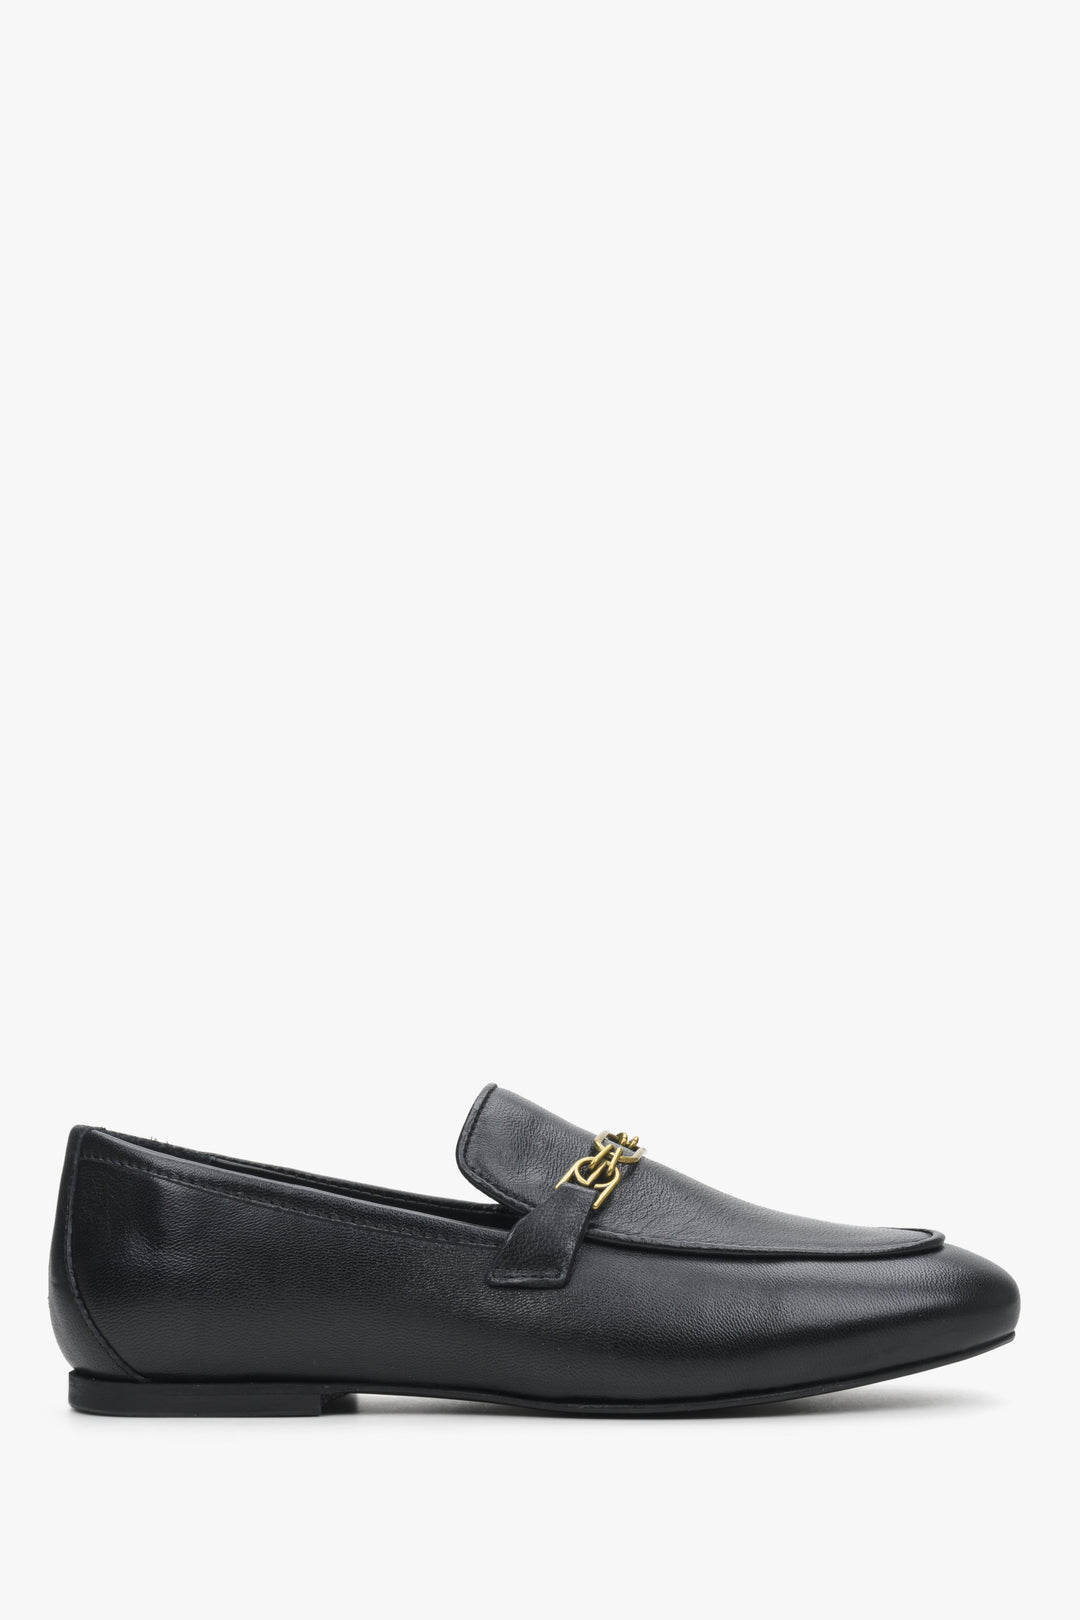 Women's black penny loafers Estro - shoe profile.